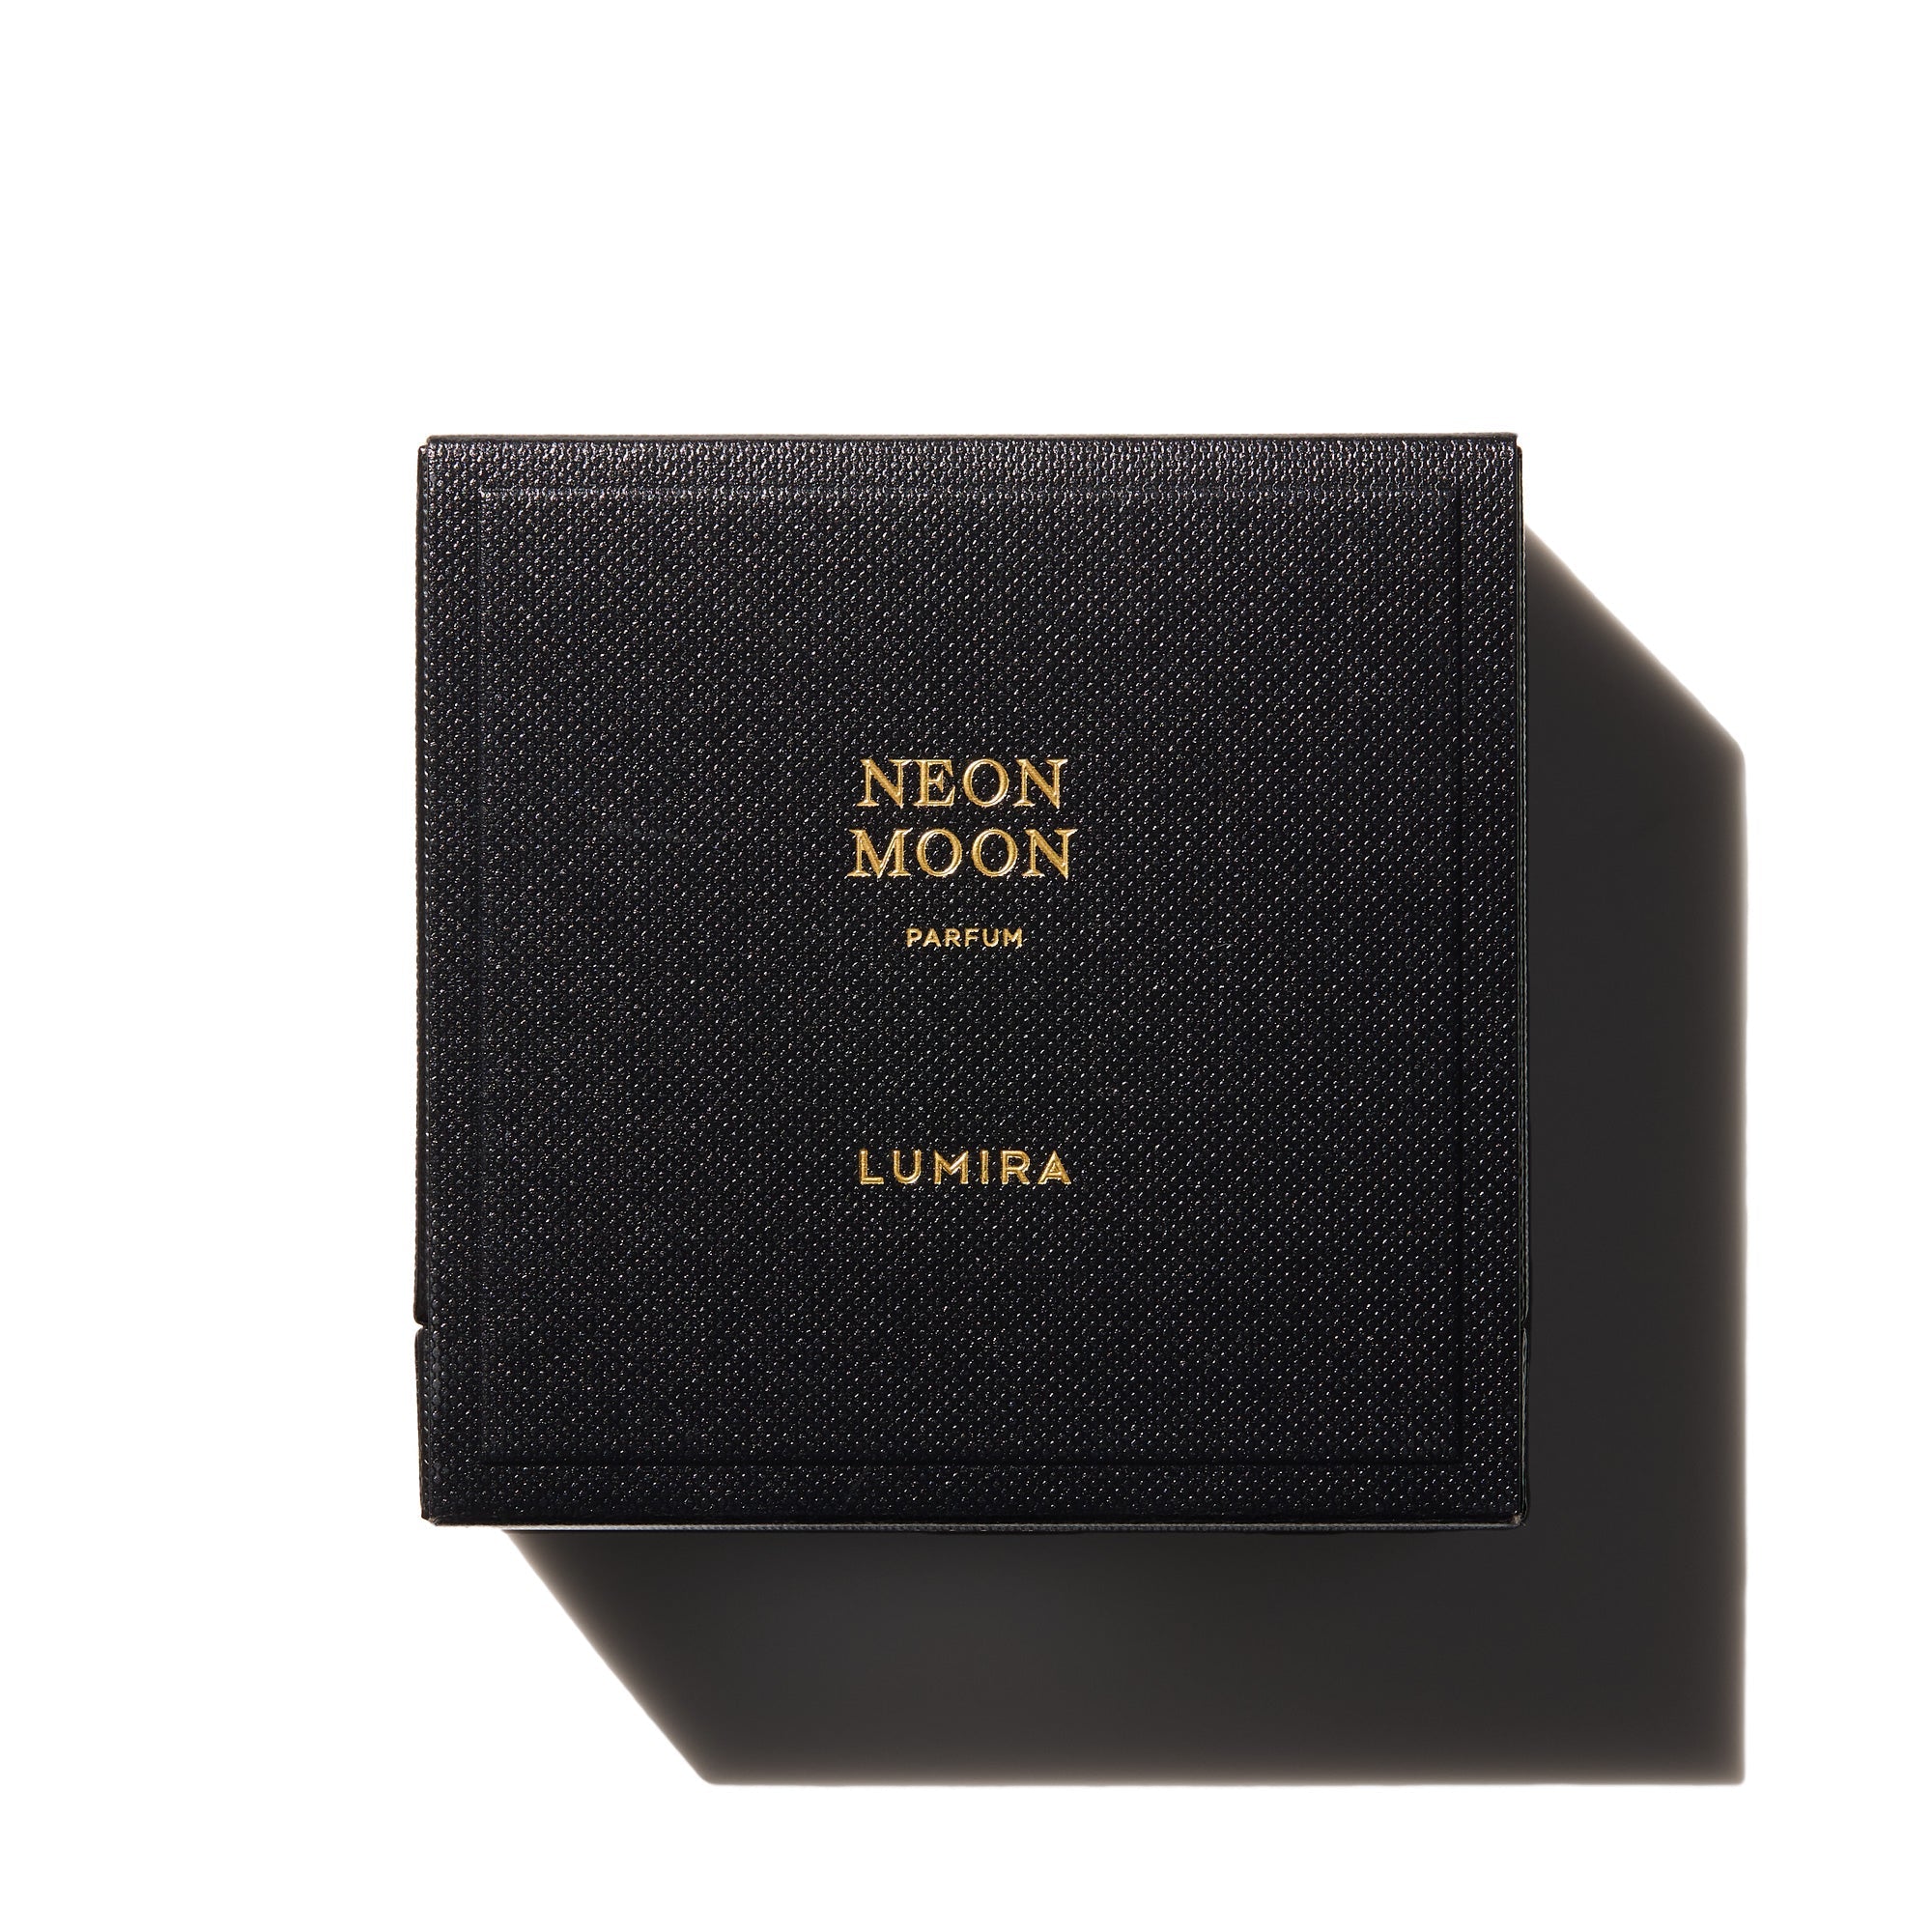 Neon Moon Eau de Parfum - LUMIRA